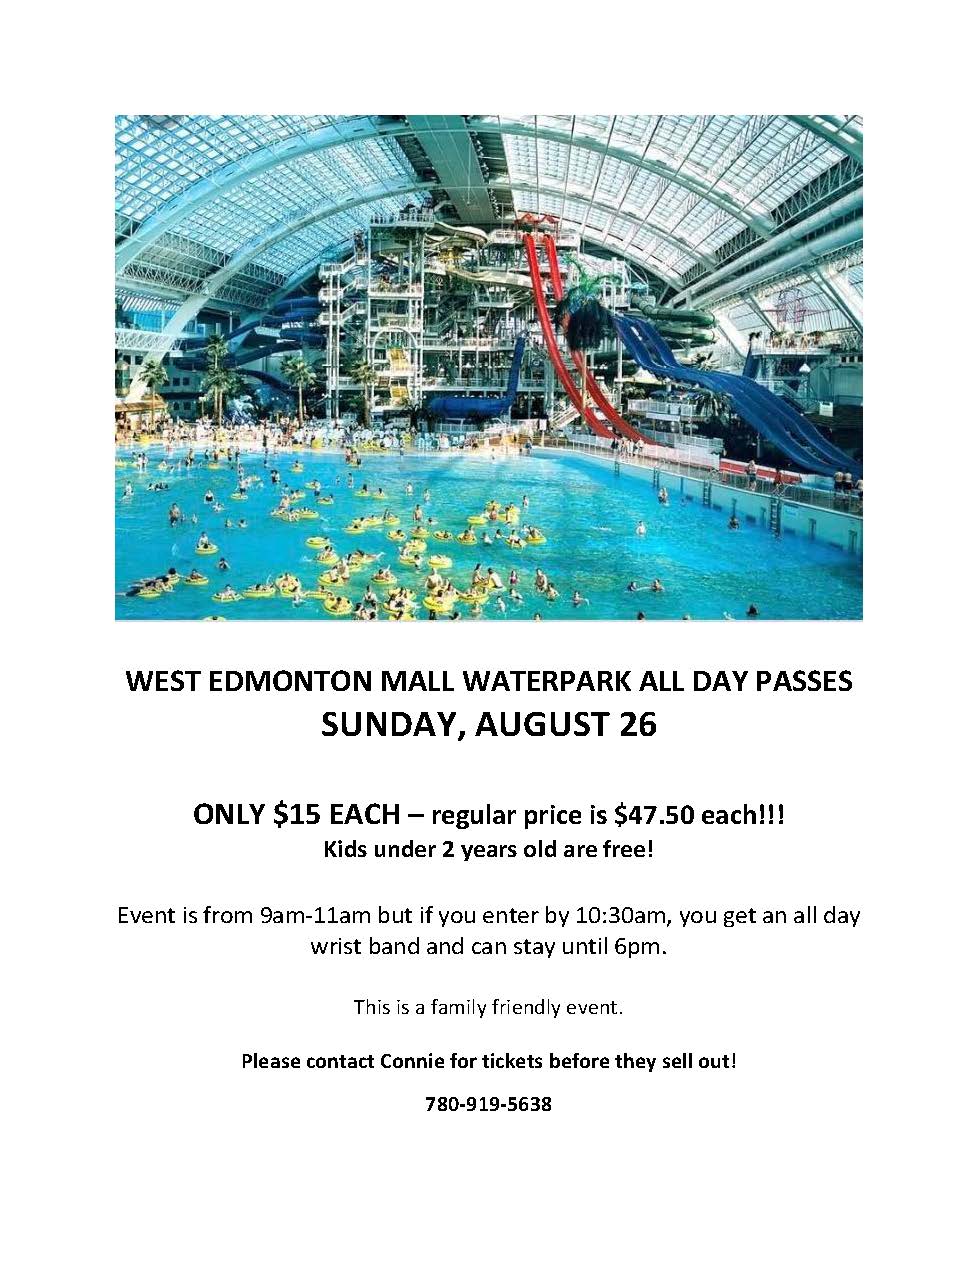 West Edmonton Mall Waterpark Passes 15 Sunday August 26 Strathcona Community League